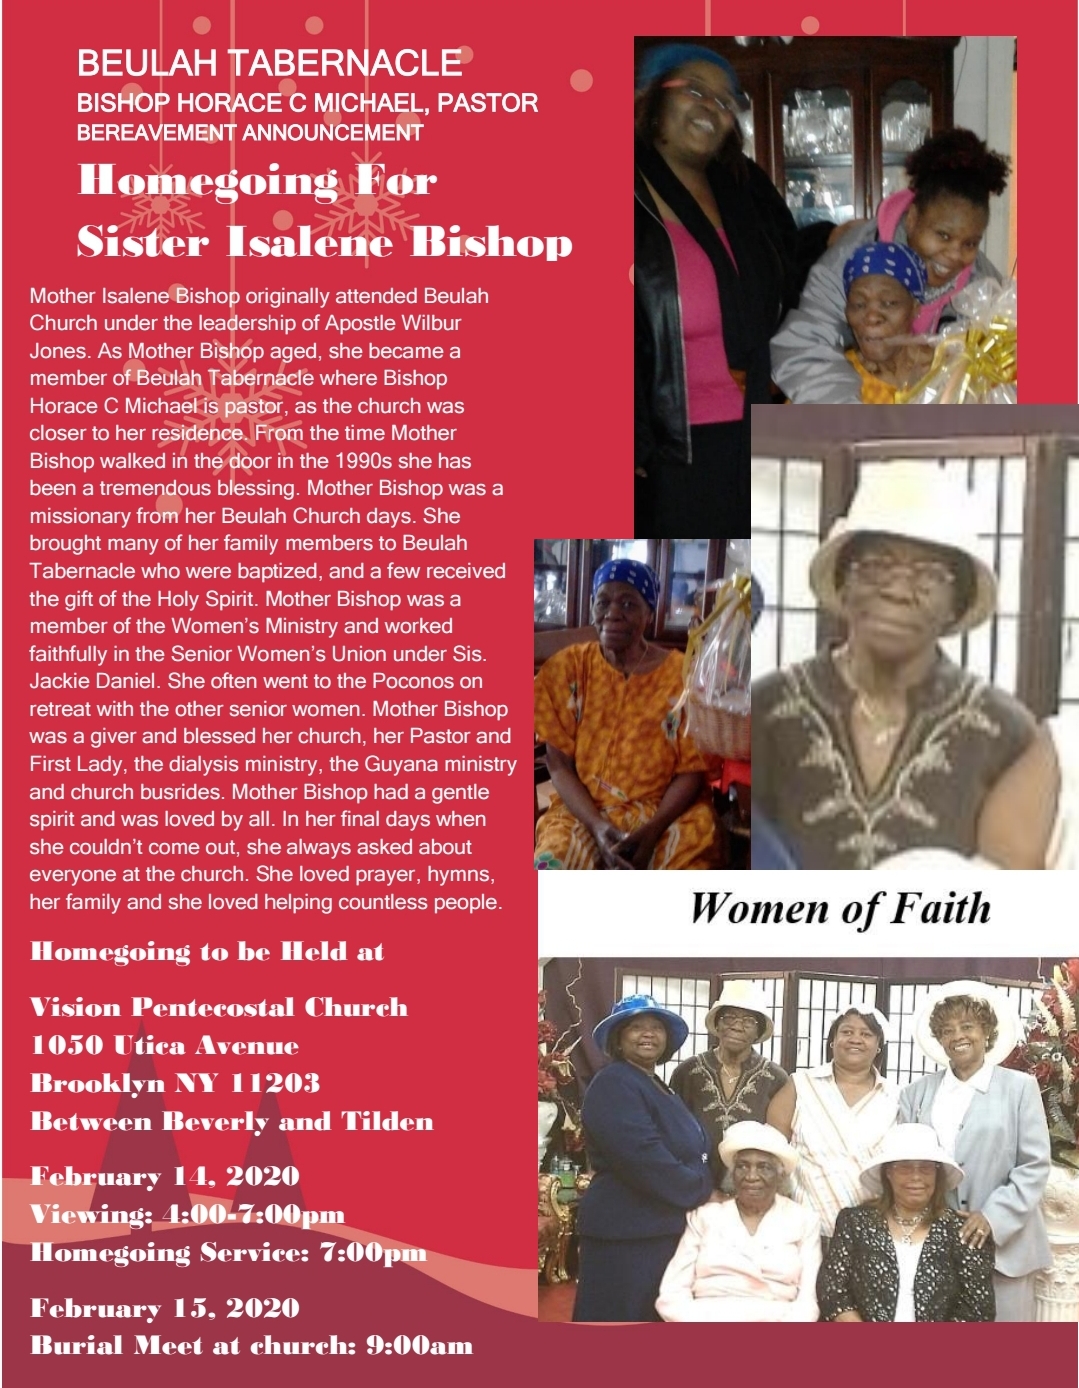 Homegoing Celebration for Mother Islene Bishop @ Vision Pentecostal Church | New York | United States